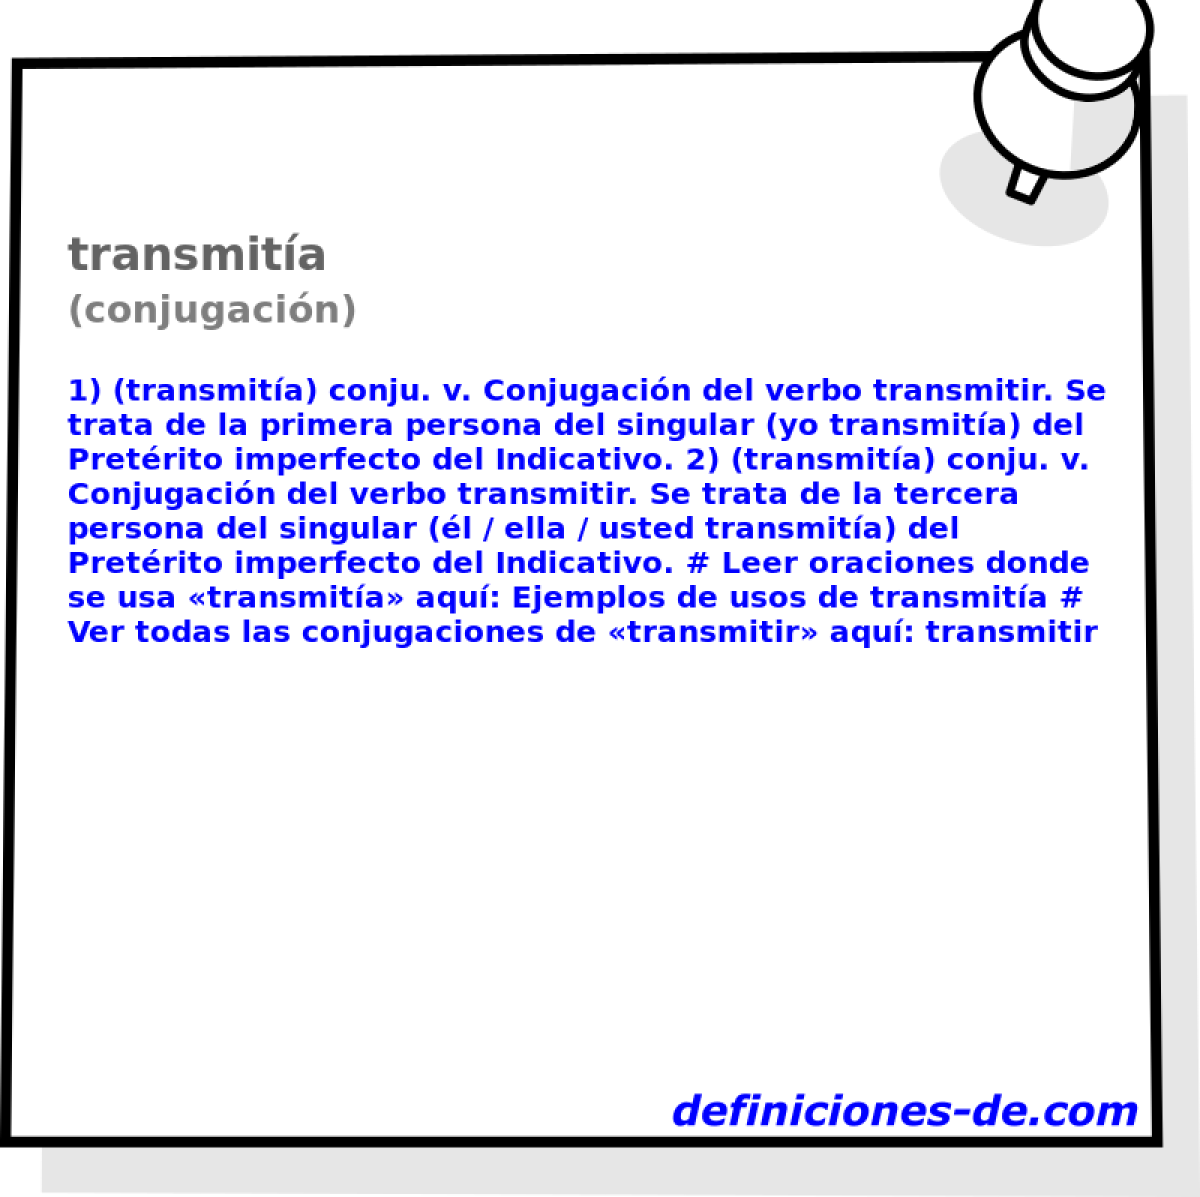 transmita (conjugacin)